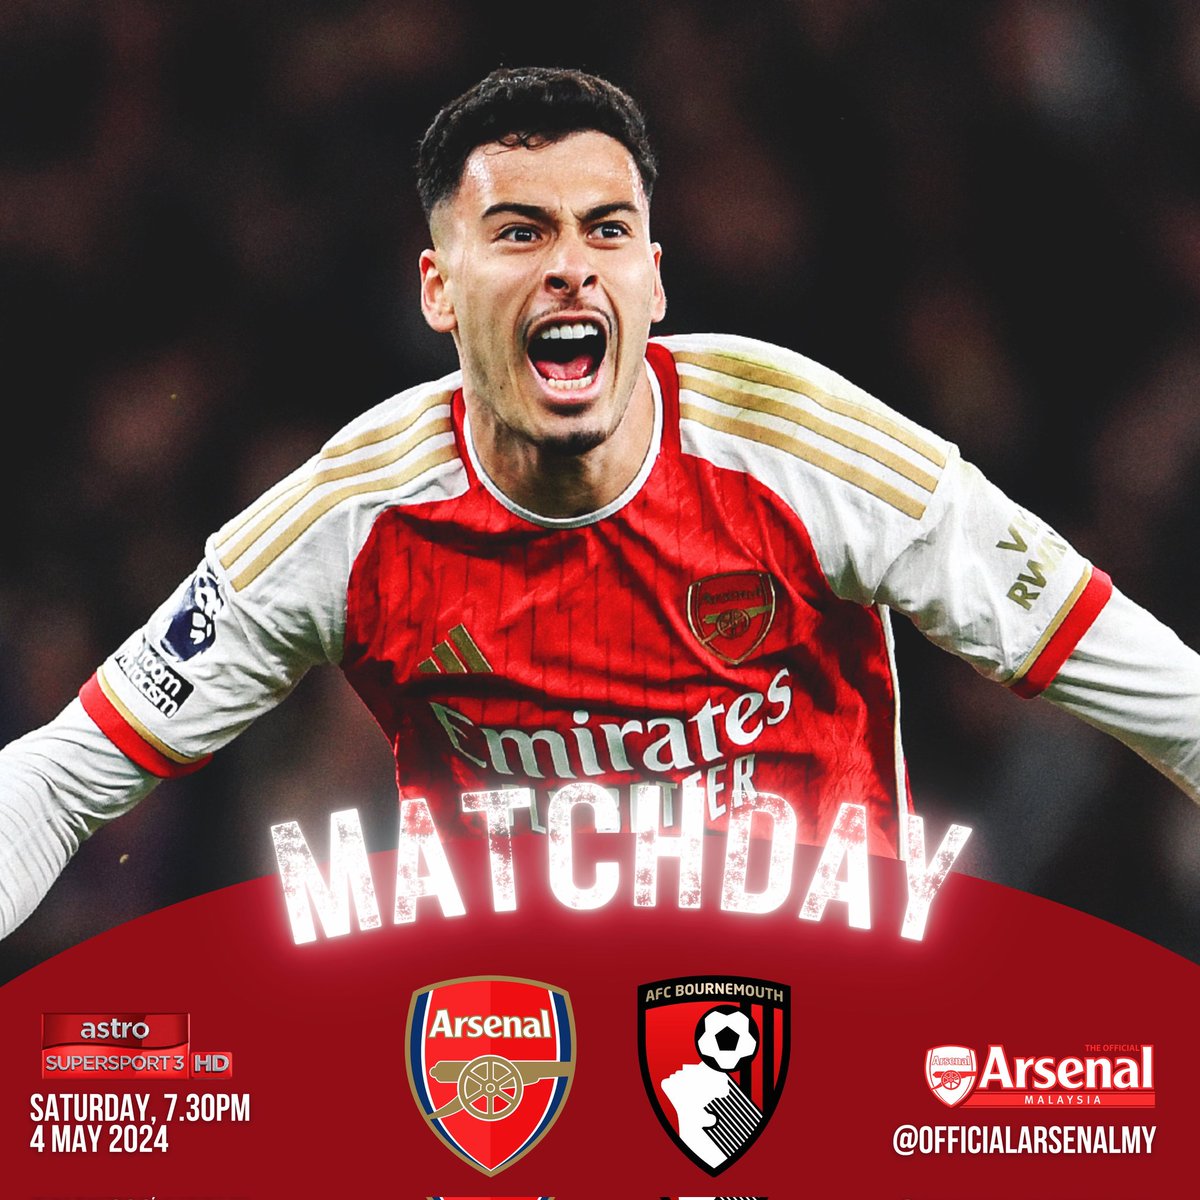 It's MATCHDAY !!!
Arsenal vs Bournemouth 
#Matchweek36

📅 4th MAY 2024
🕒 7.30 PM
Day: Saturday 
Astro Live 813

#Season2023/24
#ThisIsFamily
#ThisIsArsenal 
#ArsenalMalaysia
#Arsenal
#WeAreTheArsenal